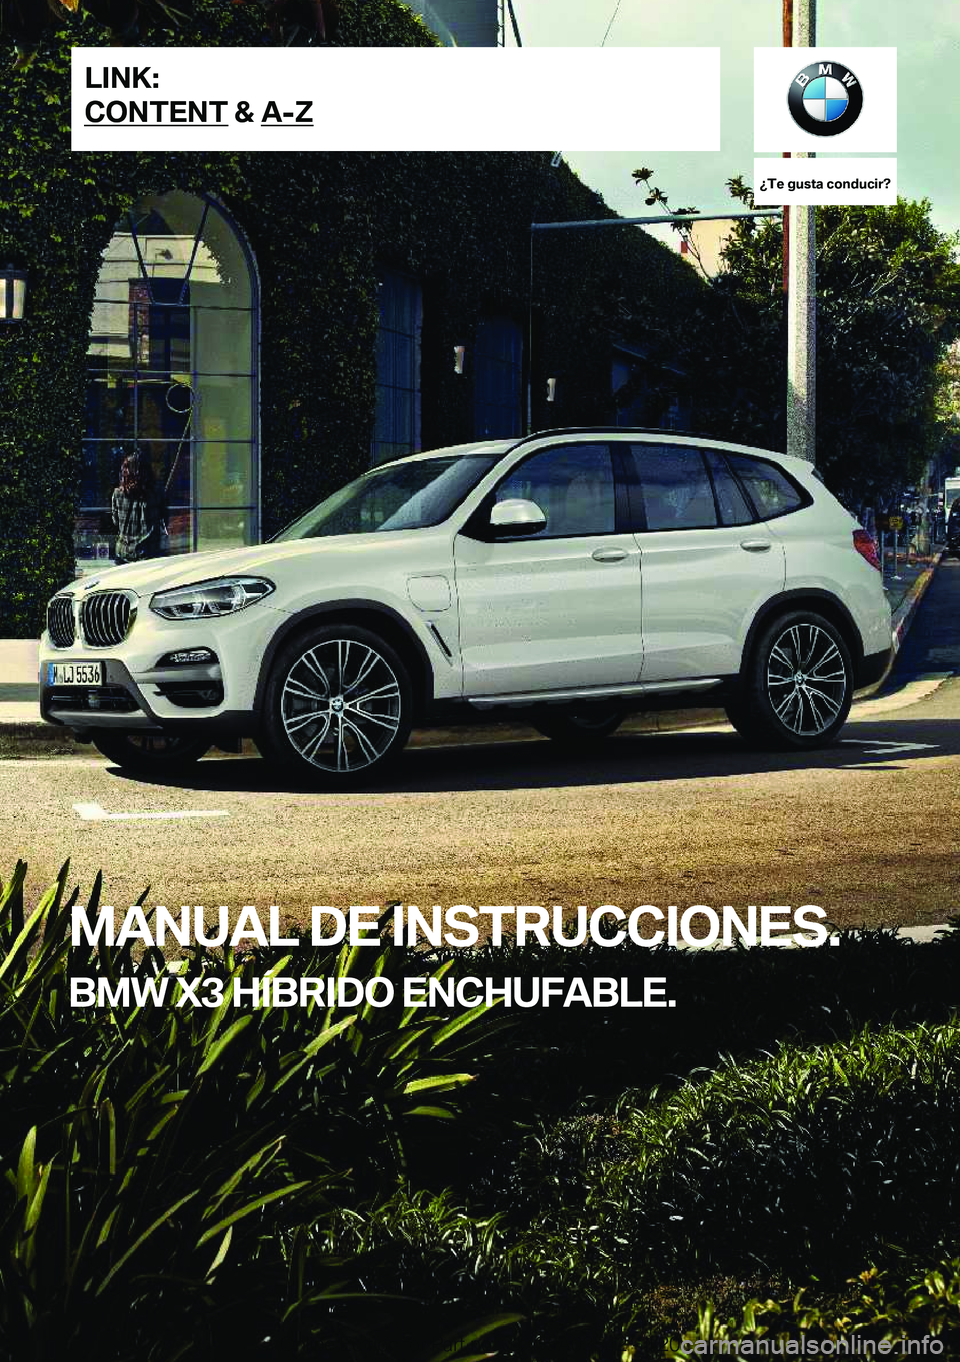 BMW X3 PLUG IN HYBRID 2020  Manuales de Empleo (in Spanish) ��T�e��g�u�s�t�a��c�o�n�d�u�c�i�r� 
�M�A�N�U�A�L��D�E��I�N�S�T�R�U�C�C�I�O�N�E�S�.
�B�M�W��X�3��H�